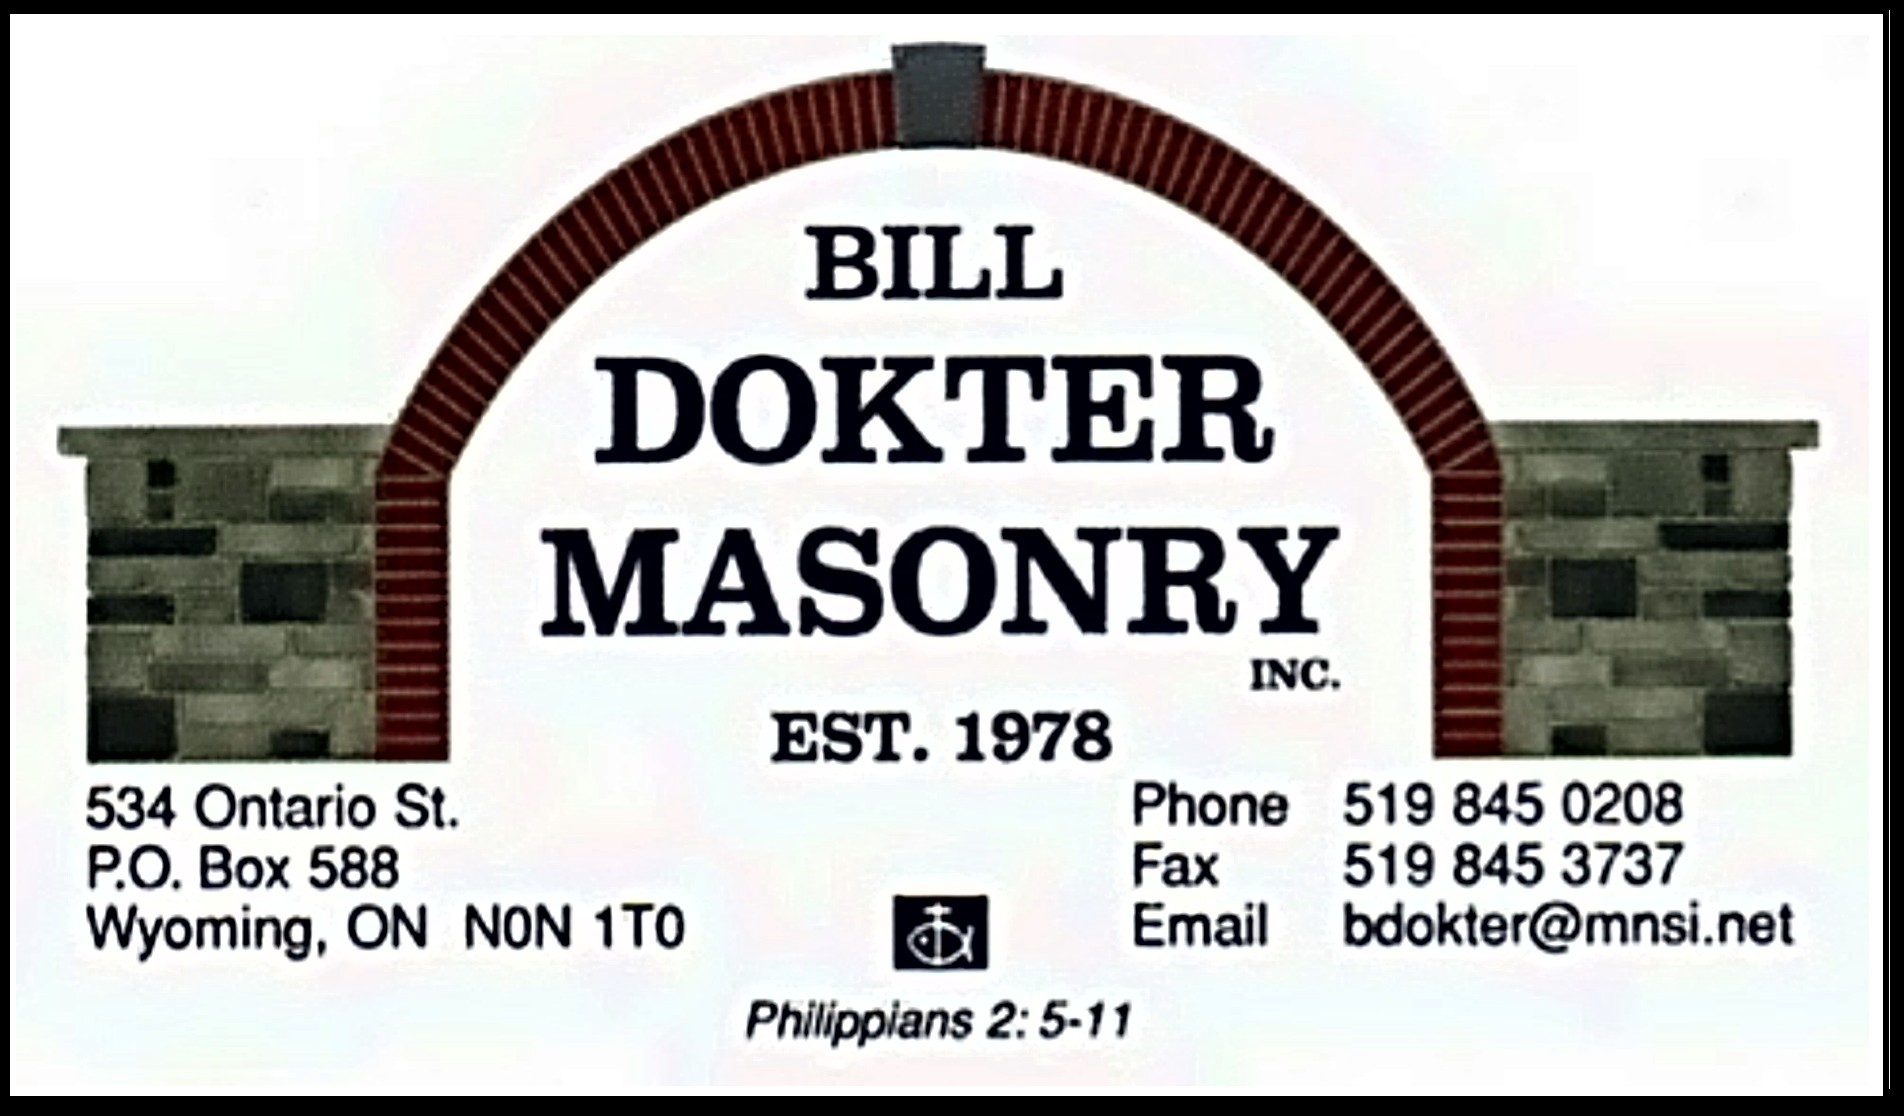 Bill Dokter Masonry